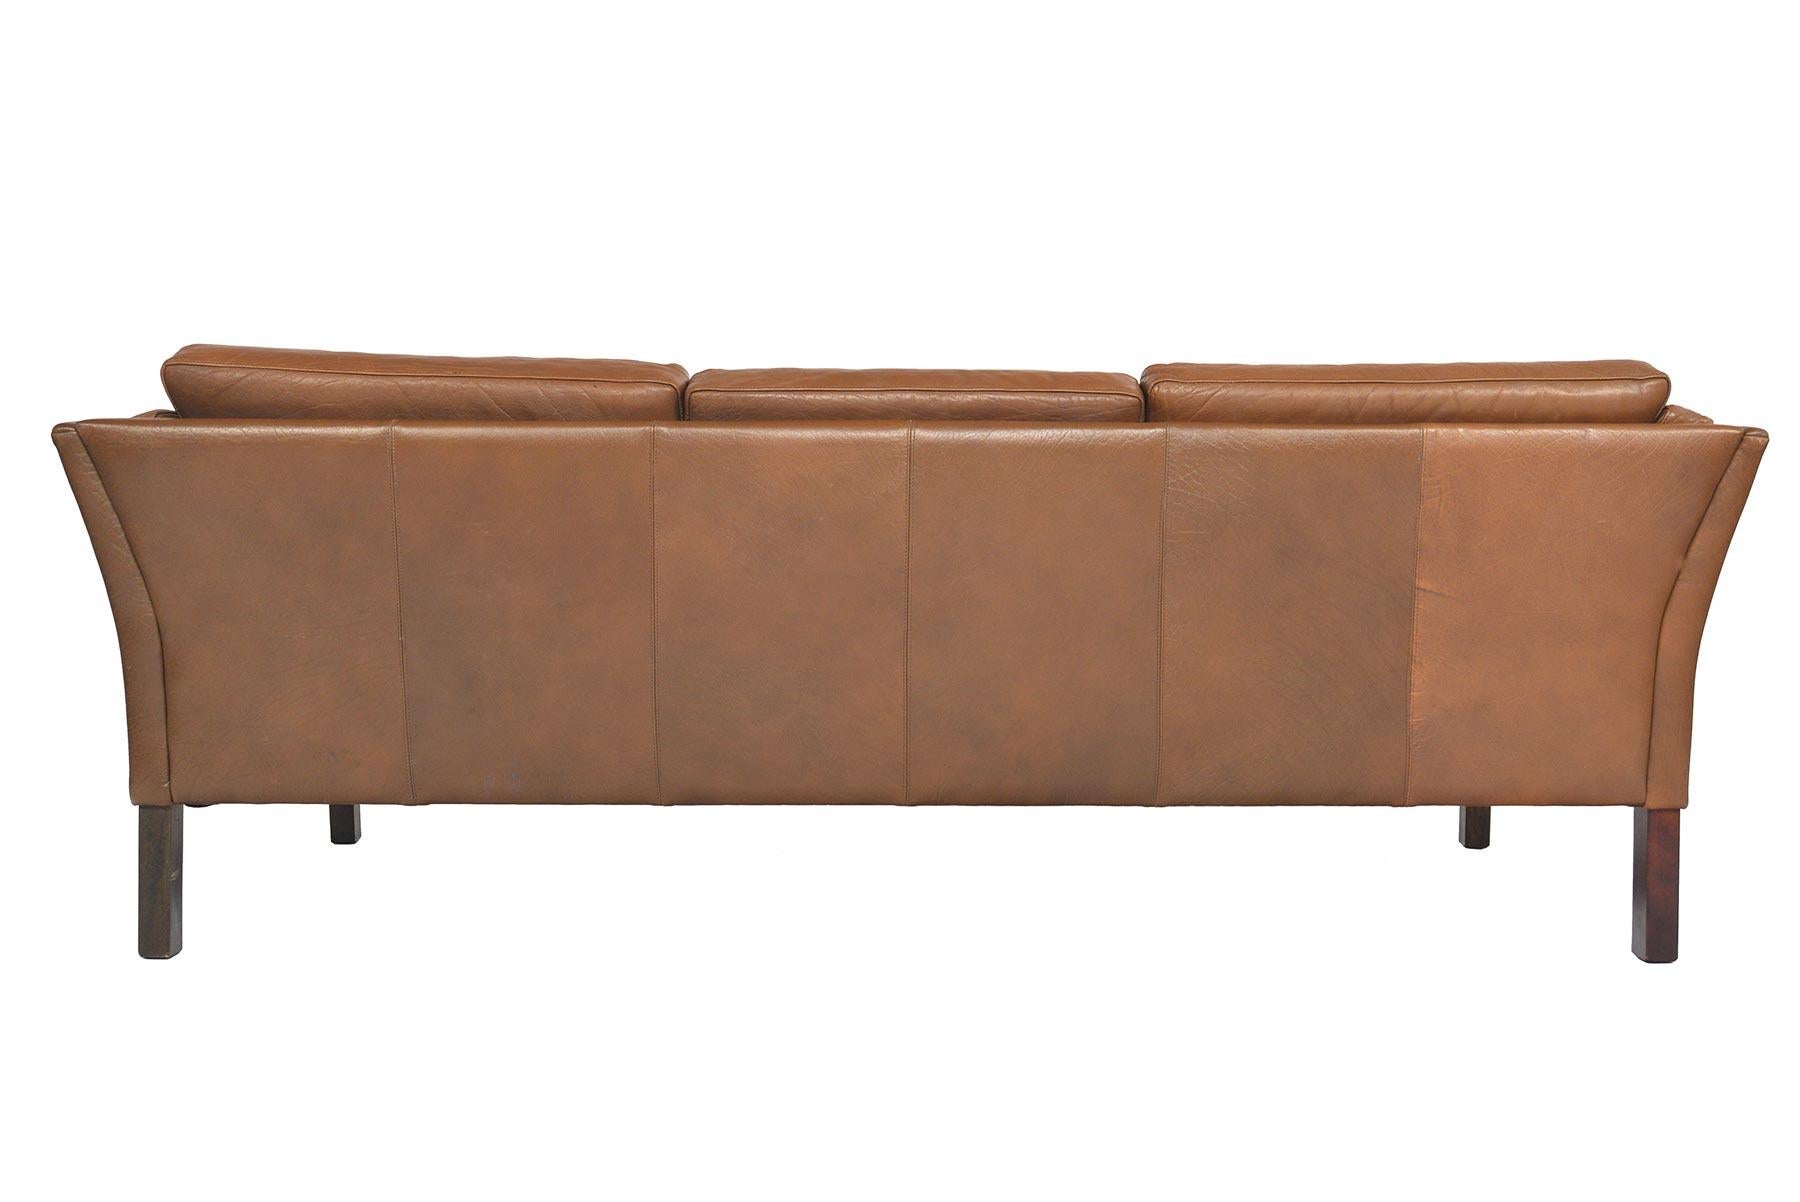 20th Century Danish Modern Brown Leather Three-Seat Sofa